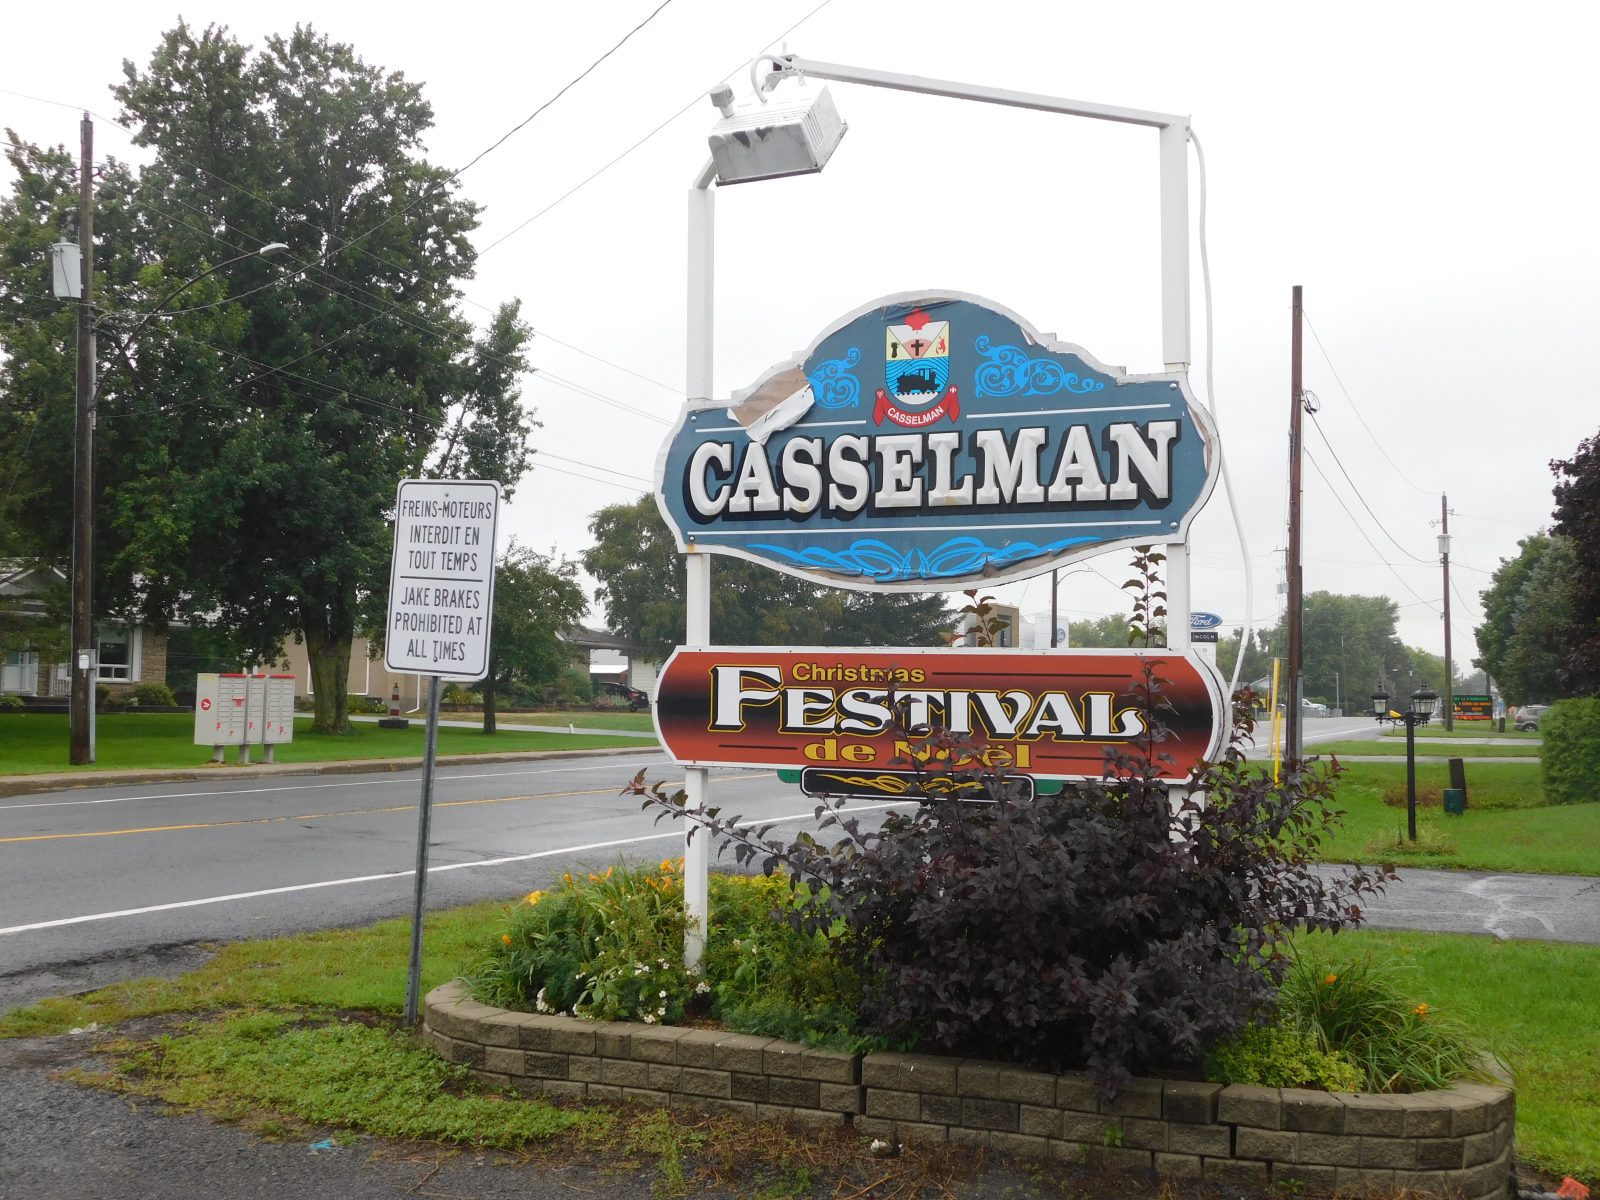 Two New Tax Rates in Casselman